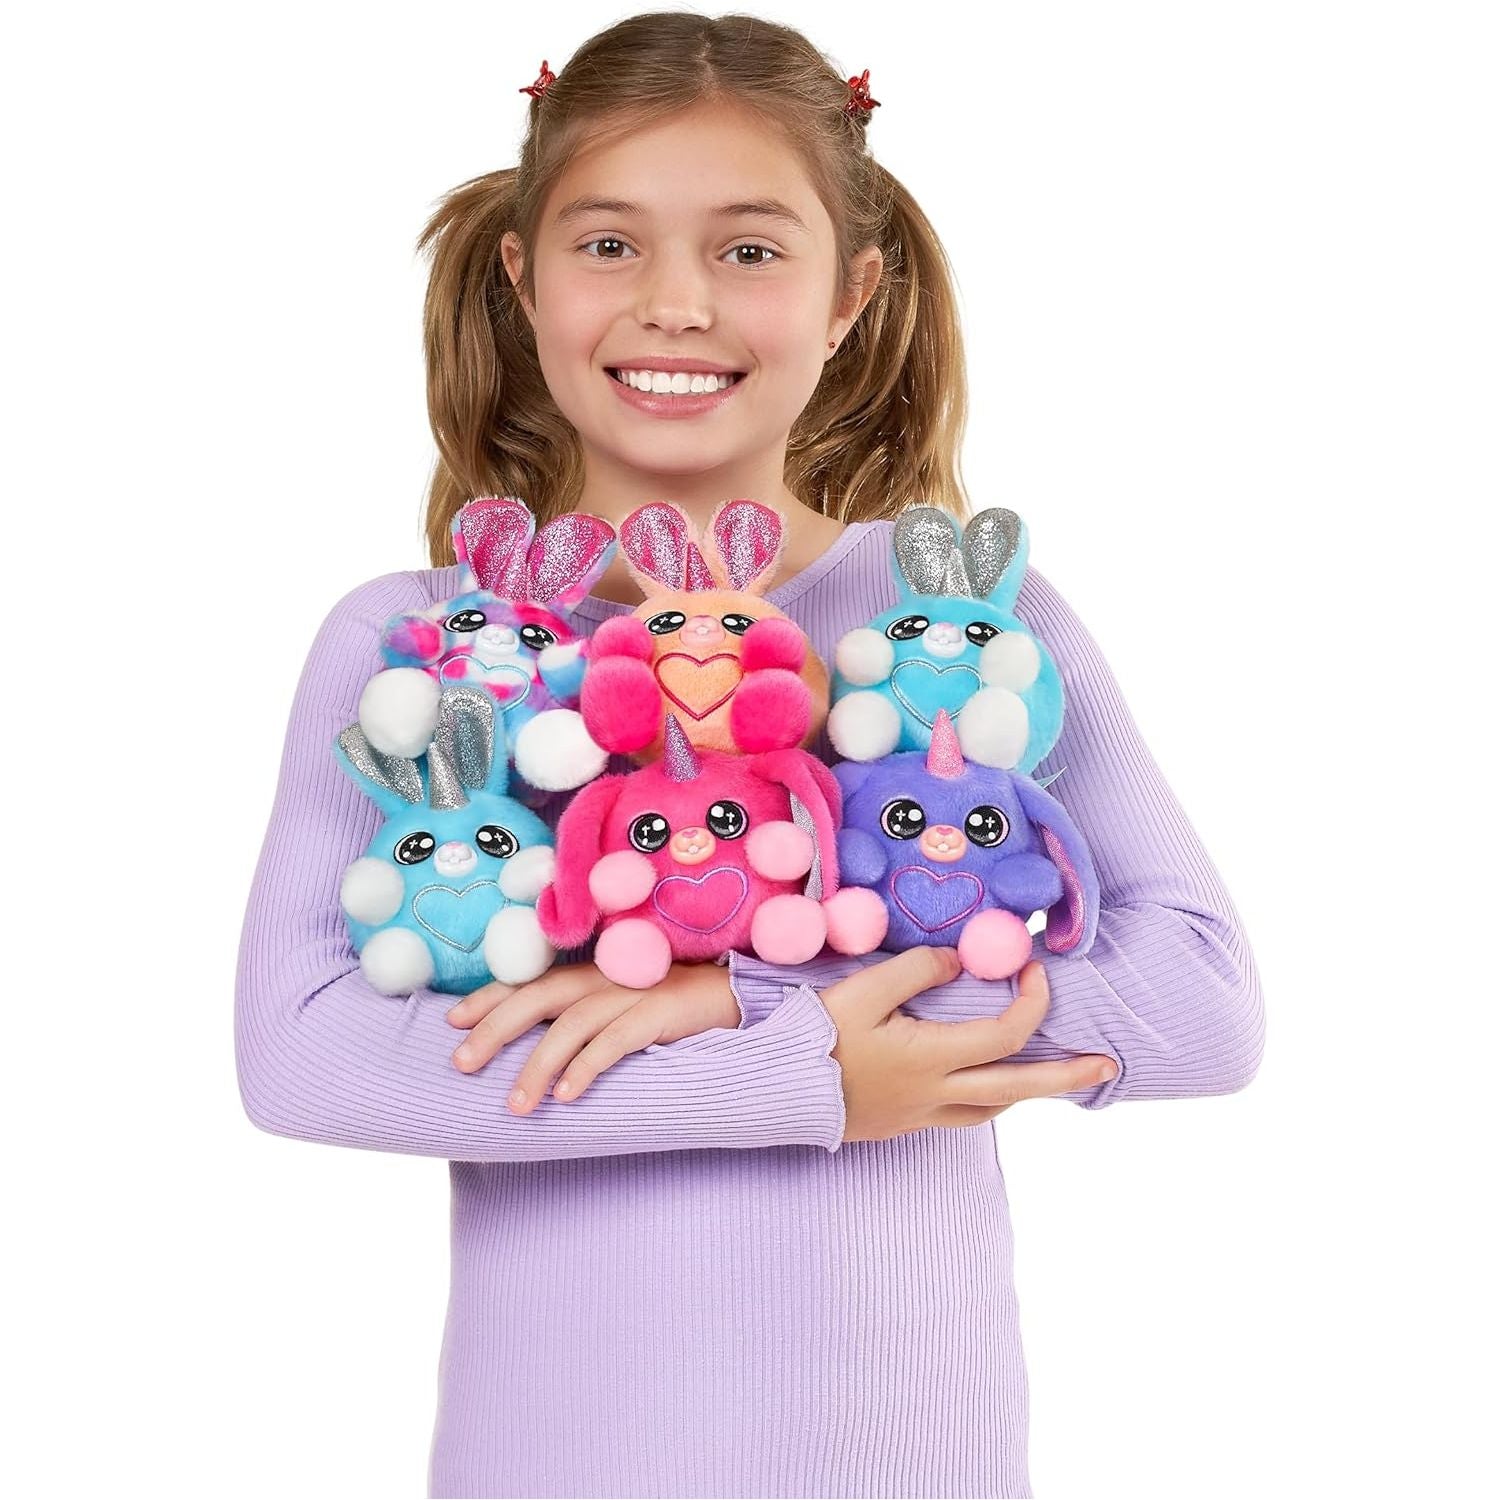 Rainbocorns Bunnycorn Surprise Series 2 by ZURU Rabbit Bunny Plush Toy Girls Gift Idea